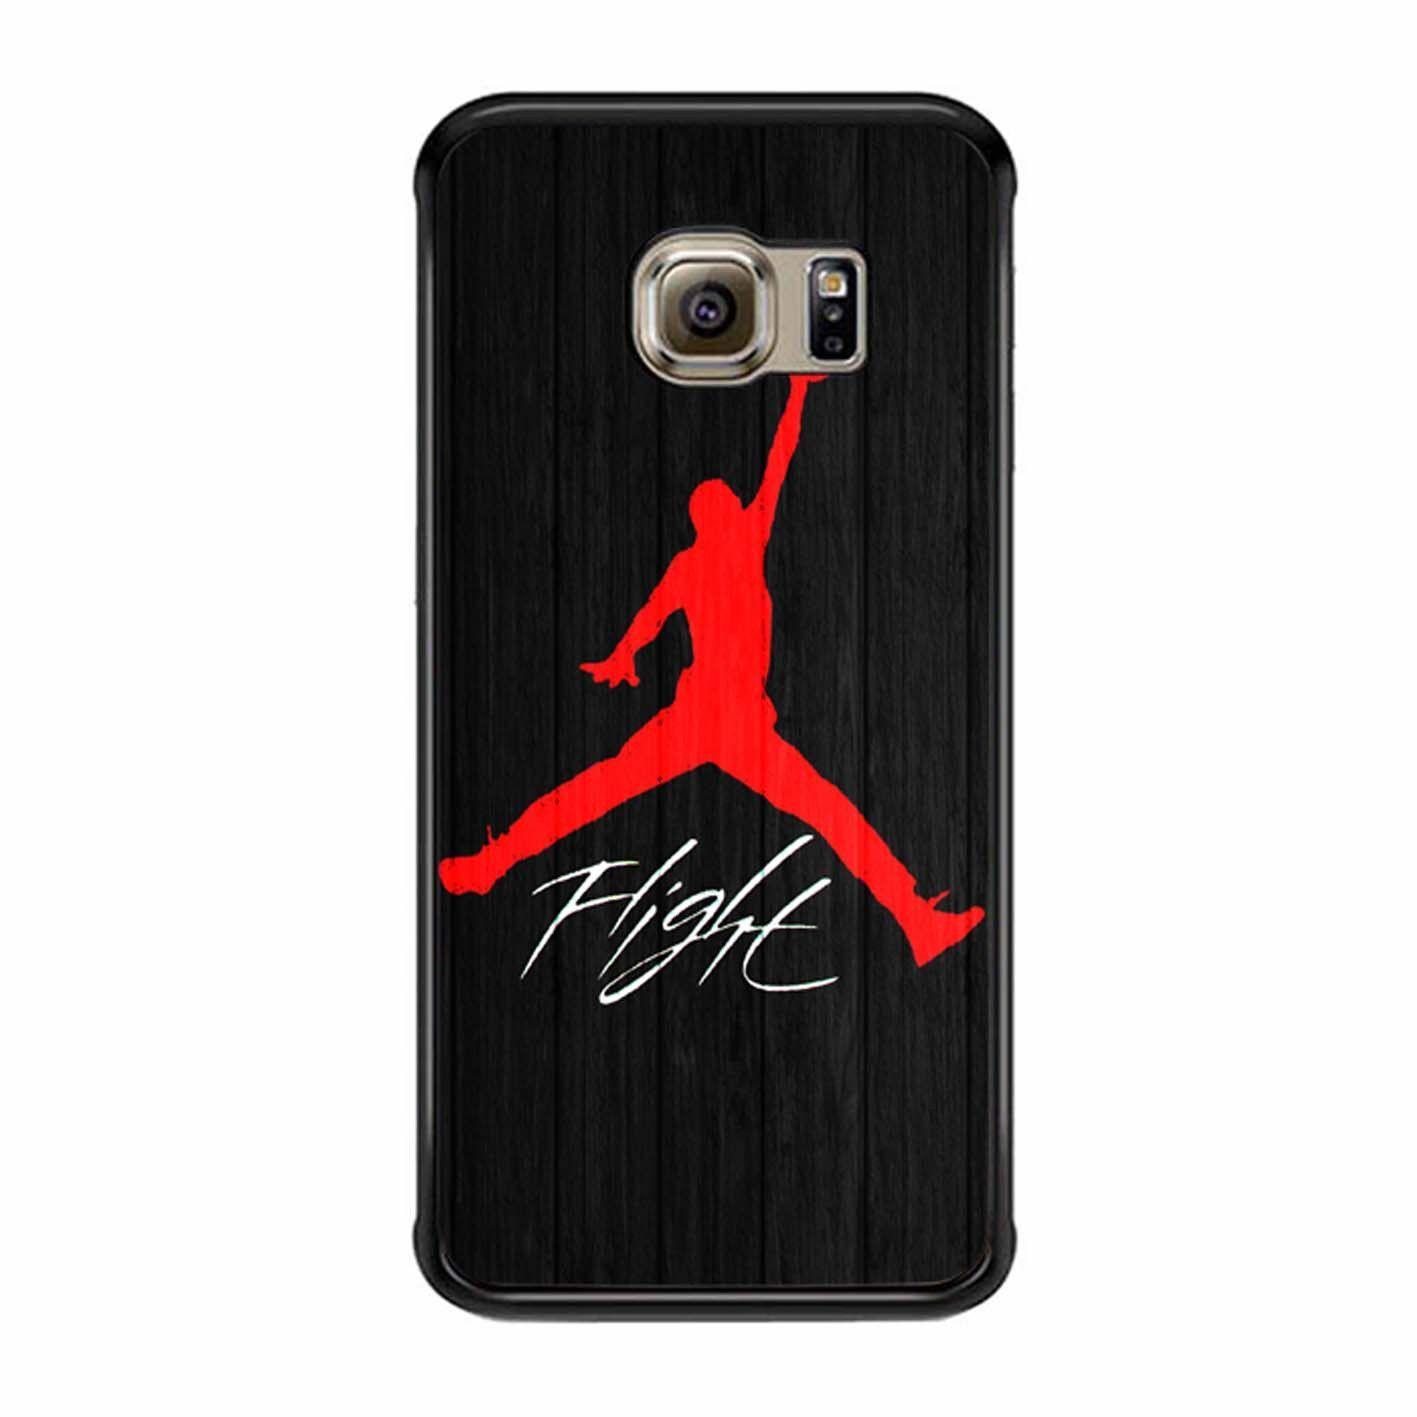 Galaxy Jordan Logo - Nike Air Jordan Logo On Wood Samsung Galaxy S6 Edge Case. phone